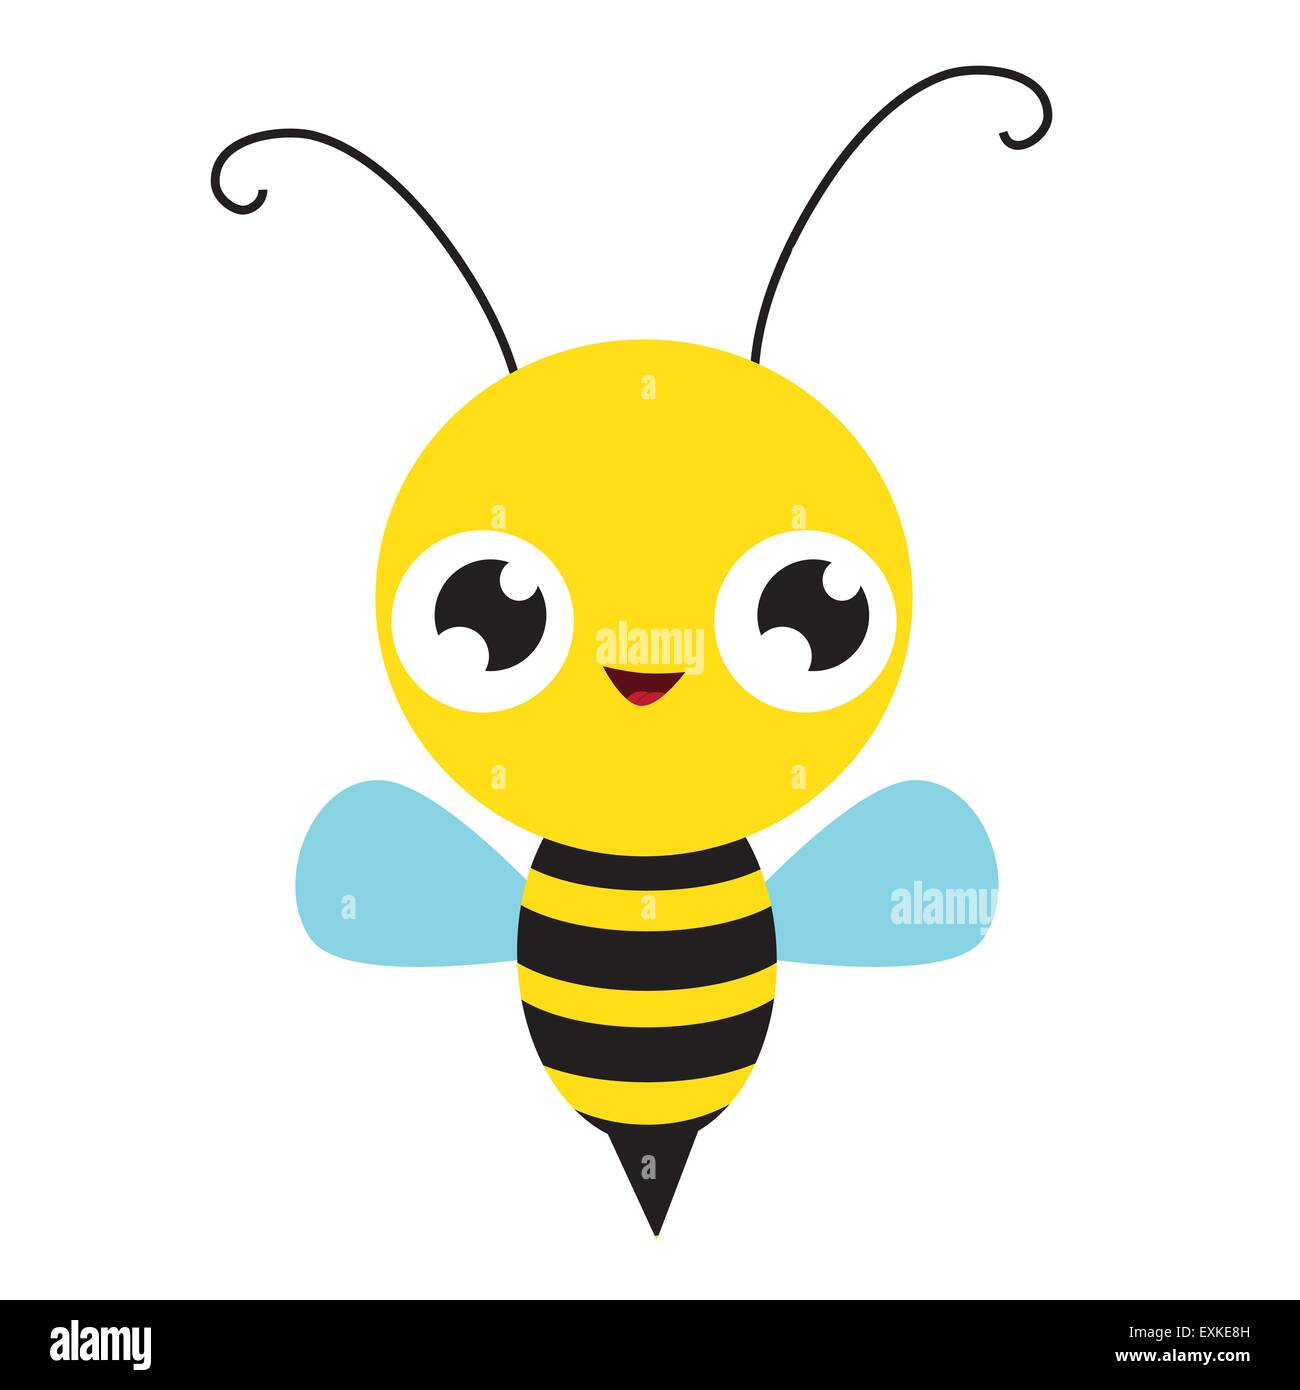 Insekt Biene Bunt Suss Lustig Cartoon Illustration Isoliert Vektor Stock Vektorgrafik Alamy